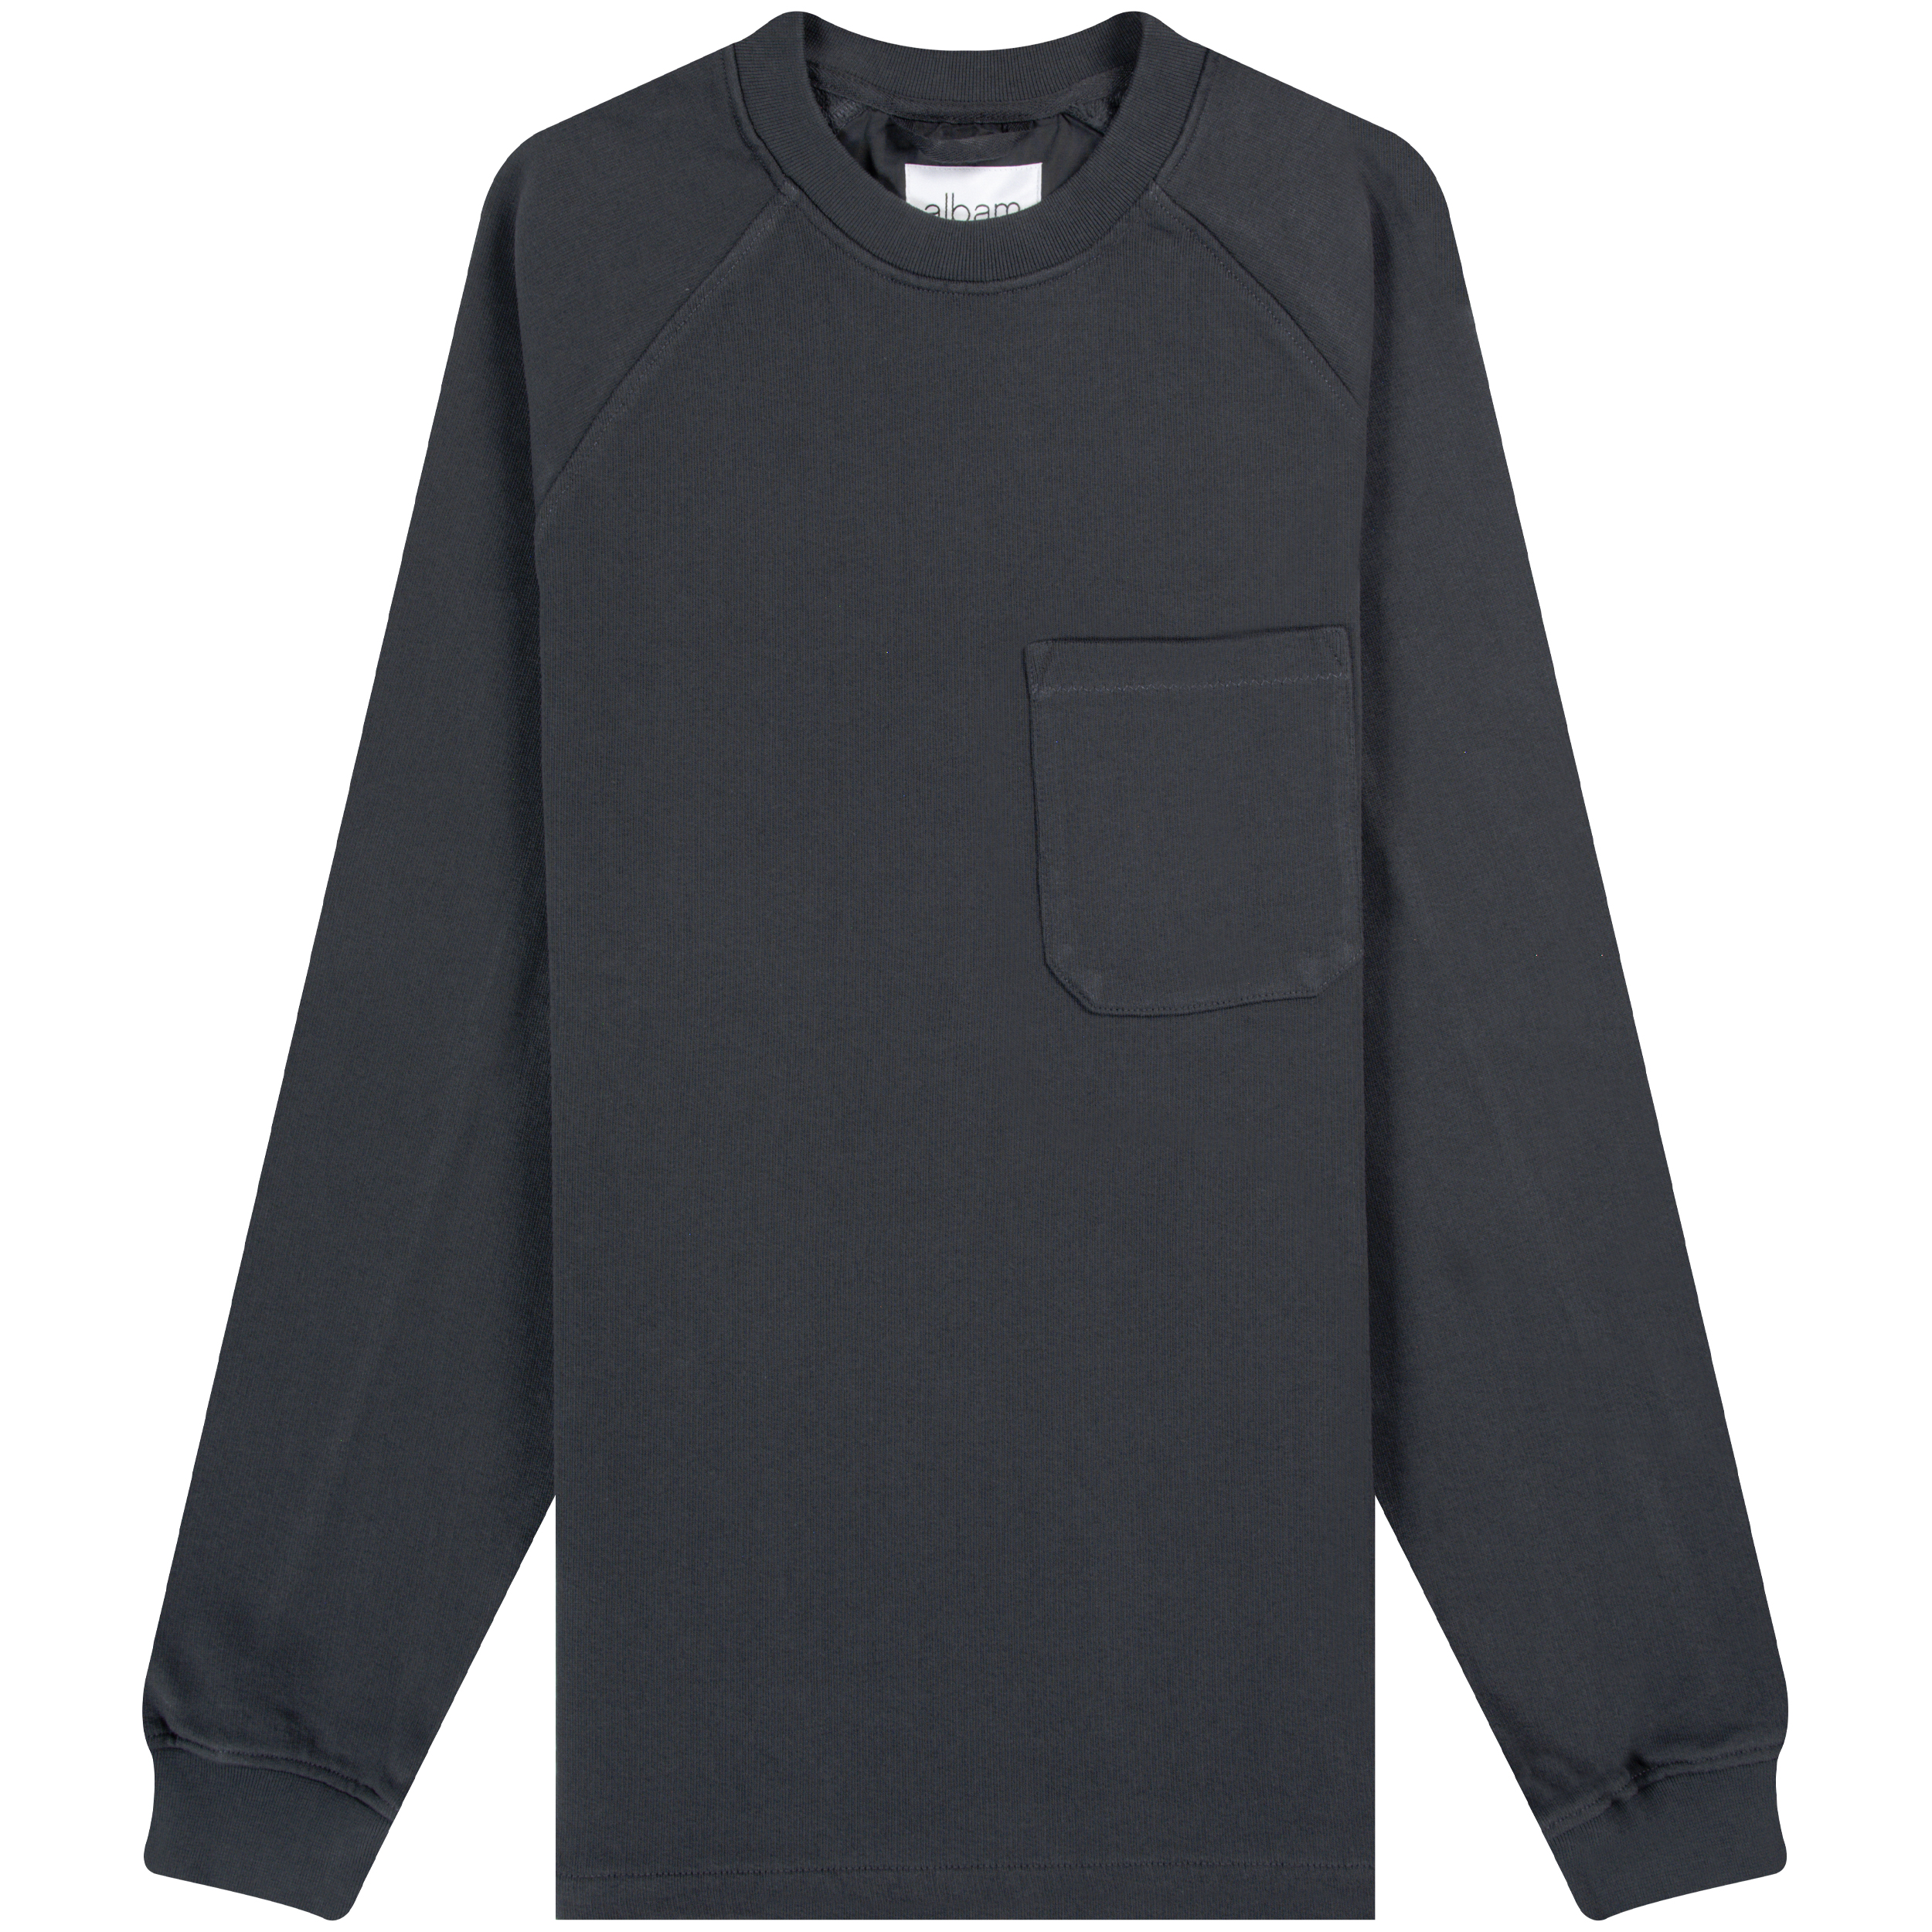 ALBAM ’Motormans’ Pigment Dyed Smock Sweatshirt Charcoal